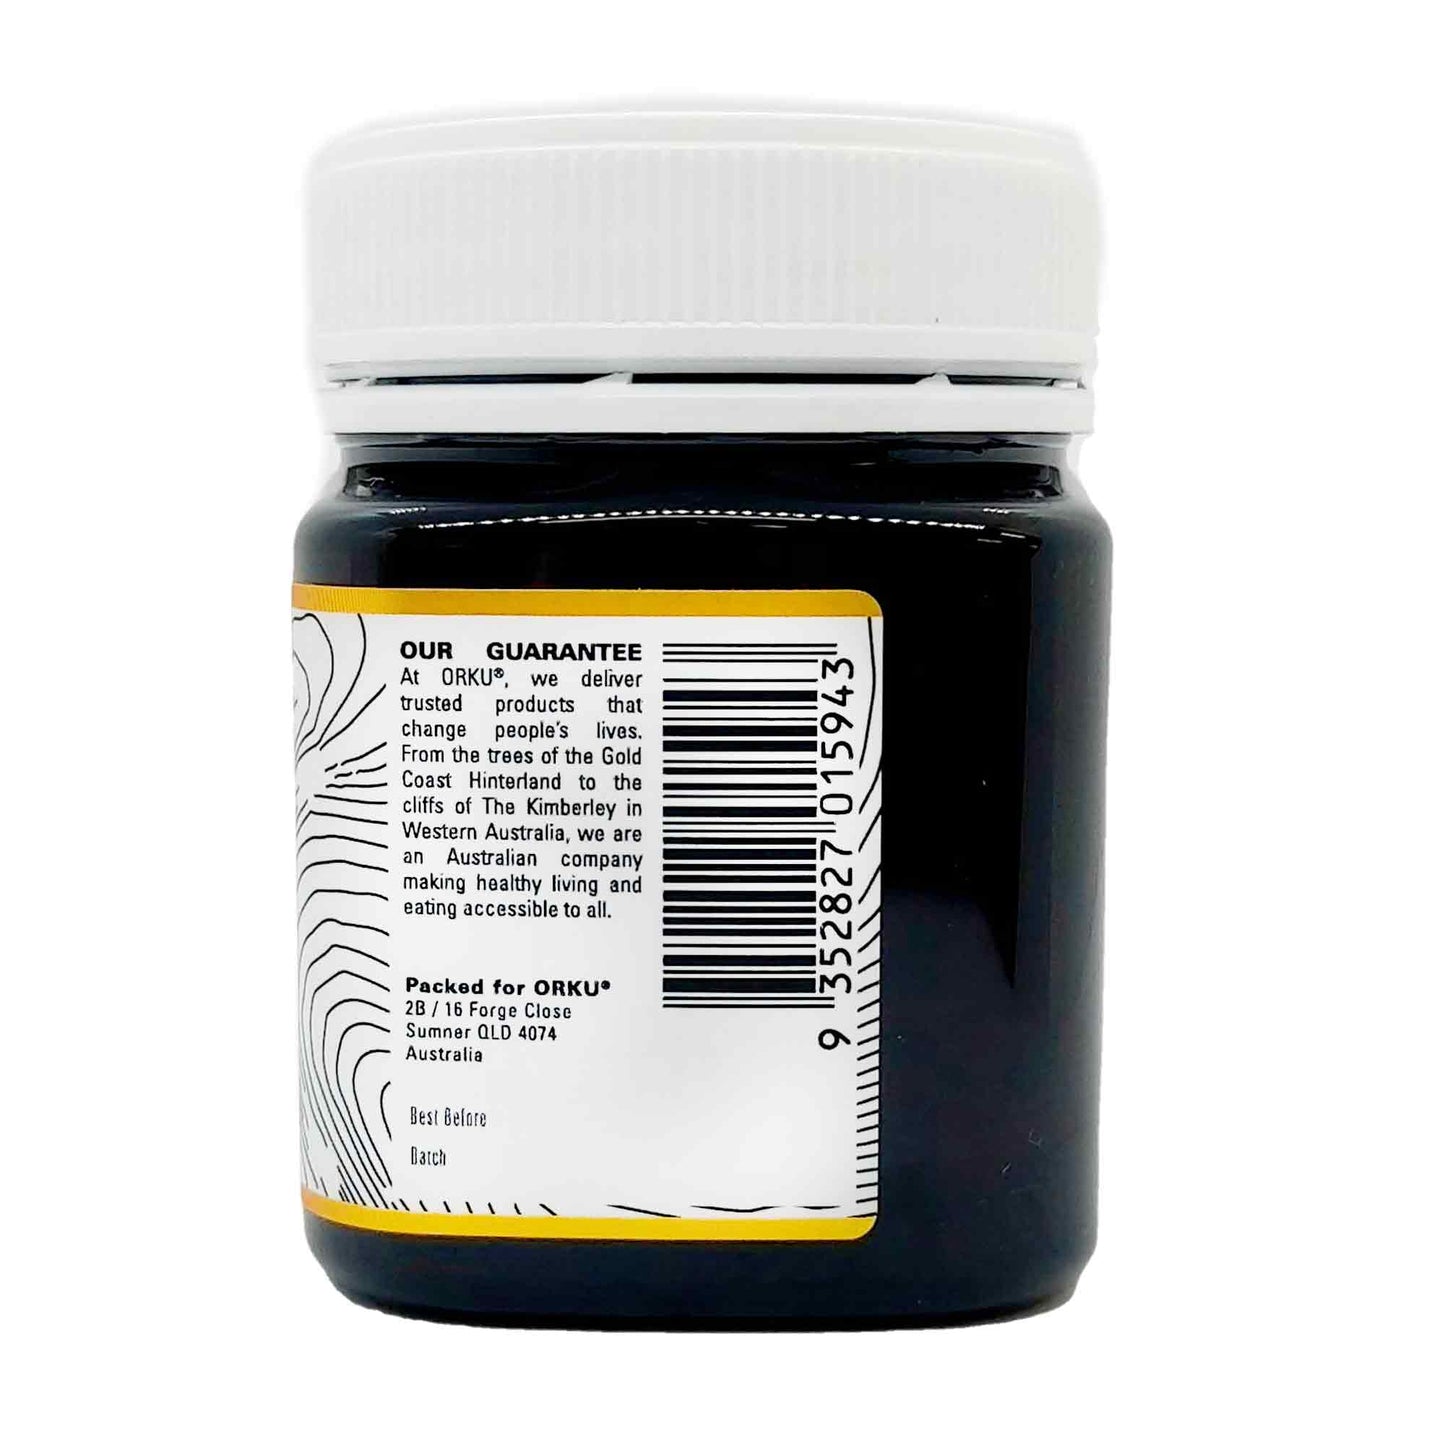 250g MGO 100+ Australian Manuka Honey - 100% Raw Natural Pure Jelly Bush